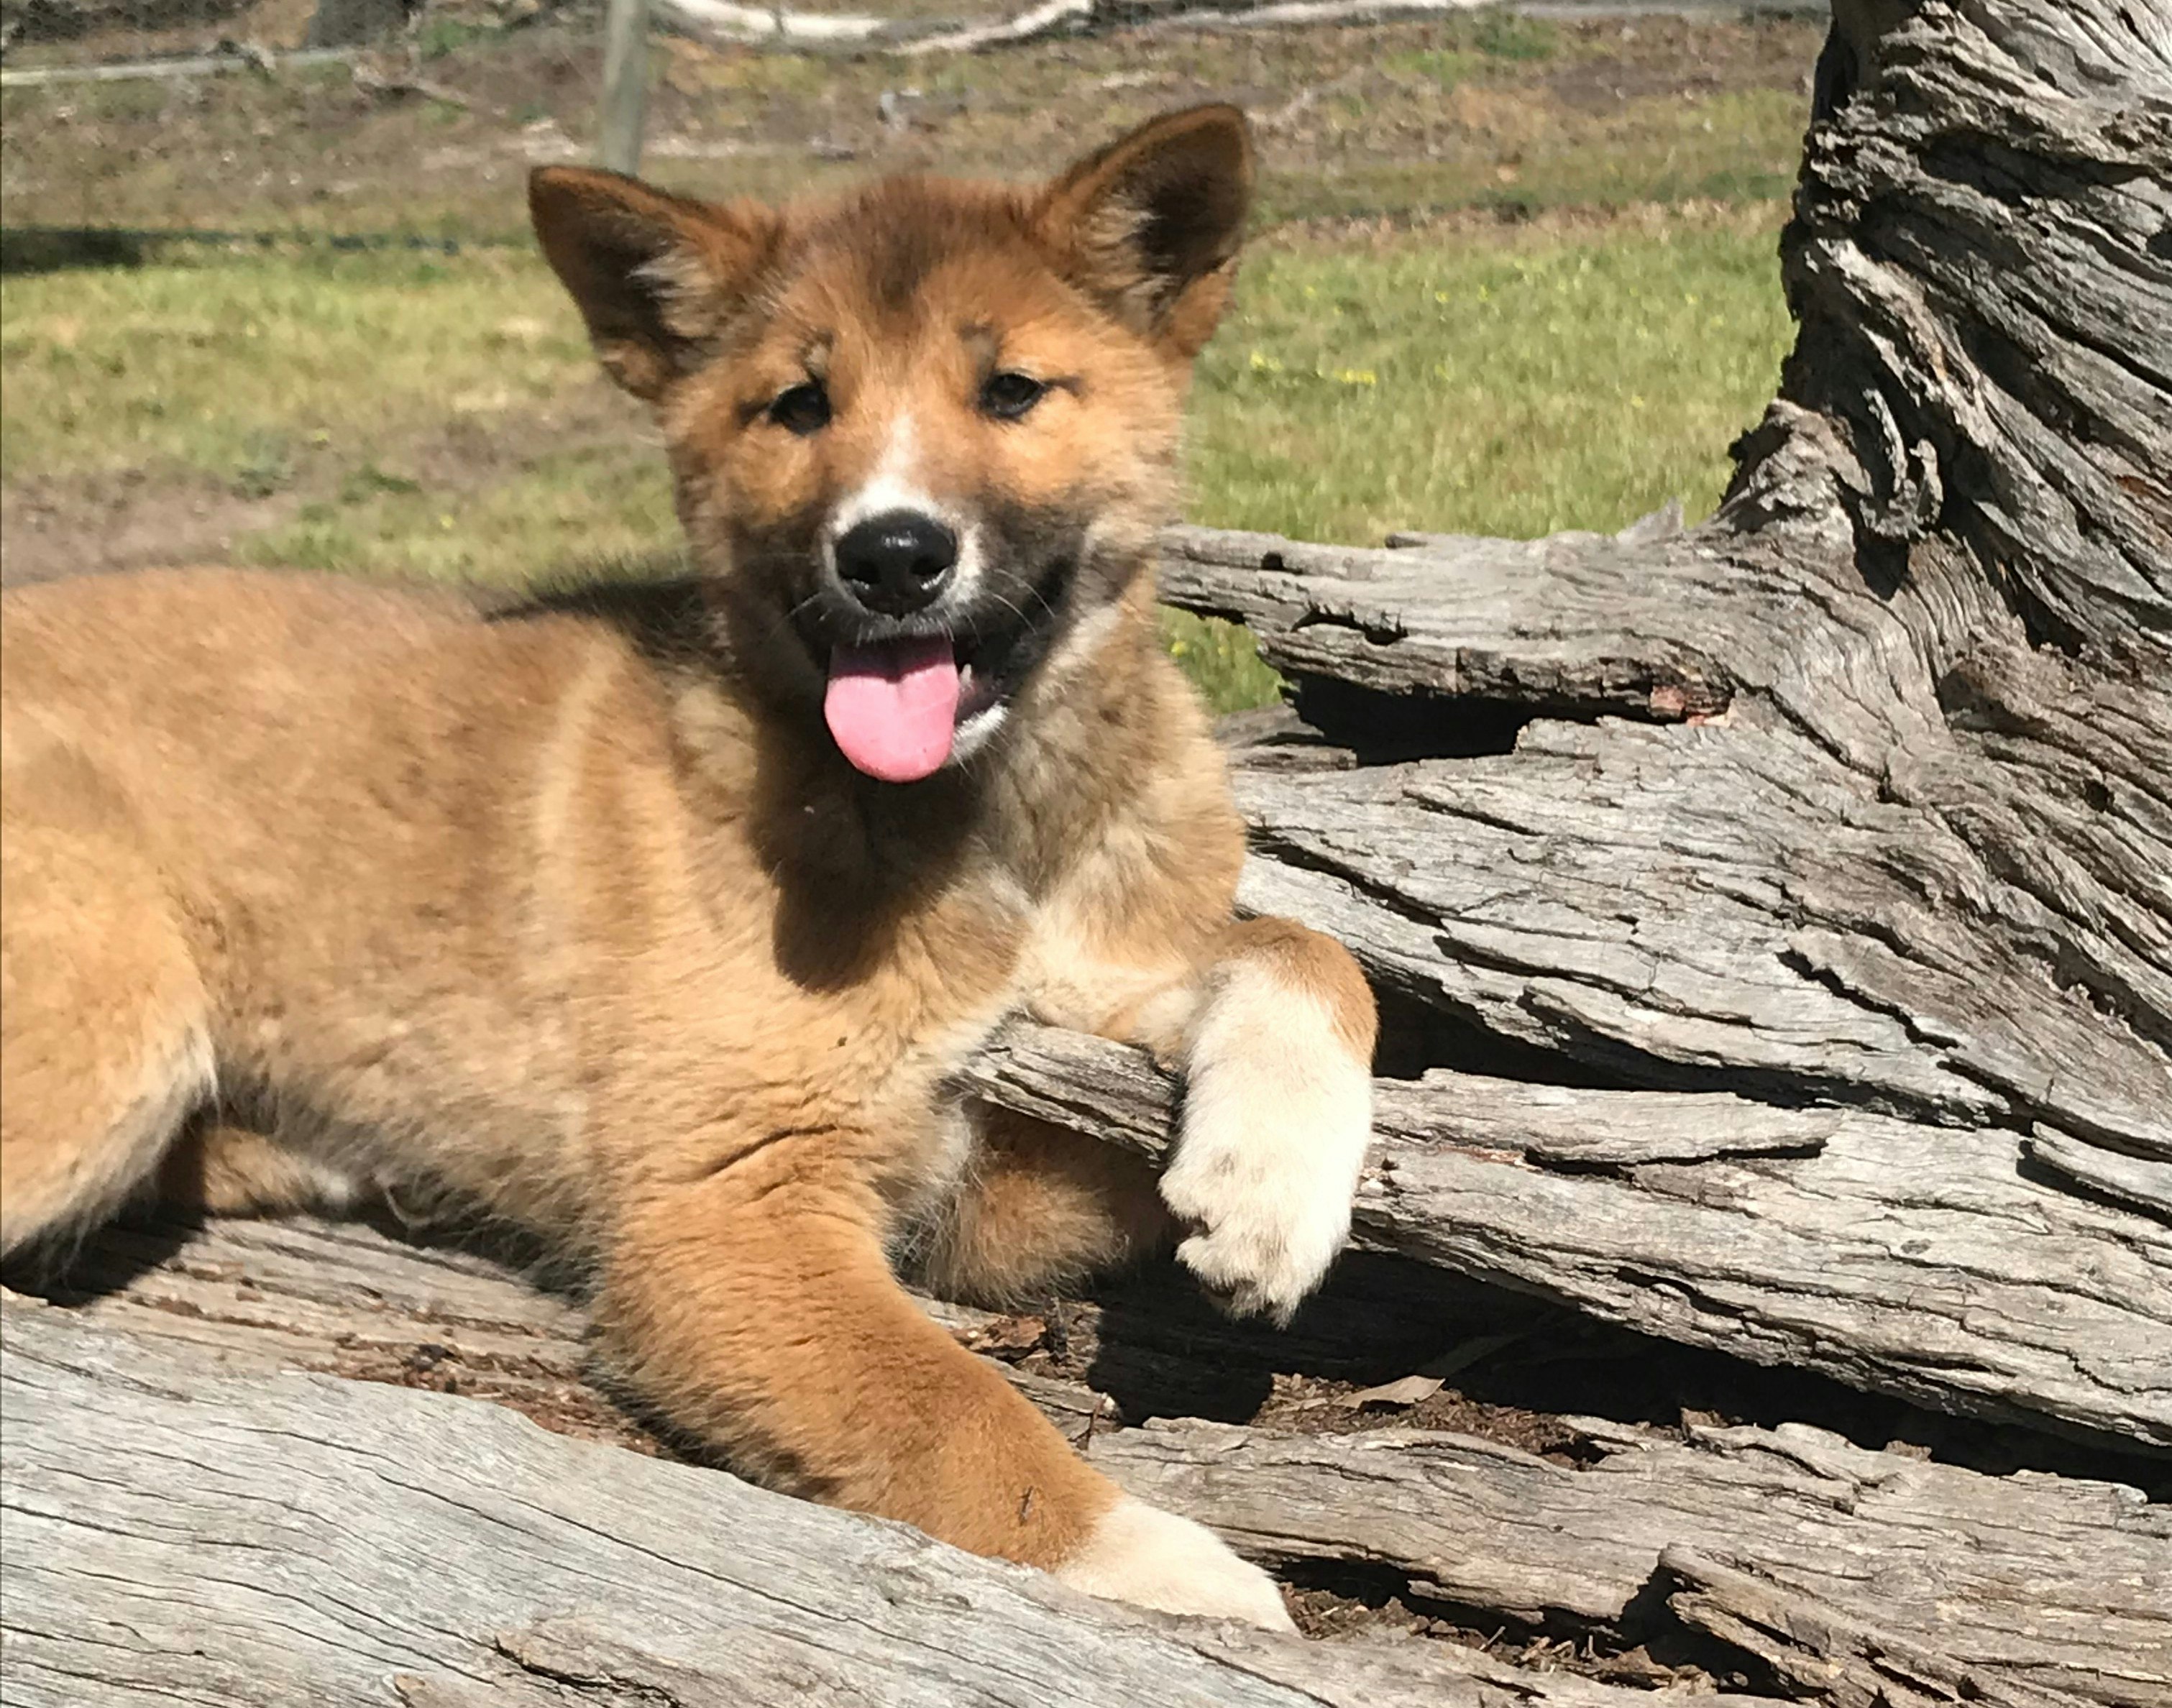 Wandi the little dingo pup in a dingo sanctuary